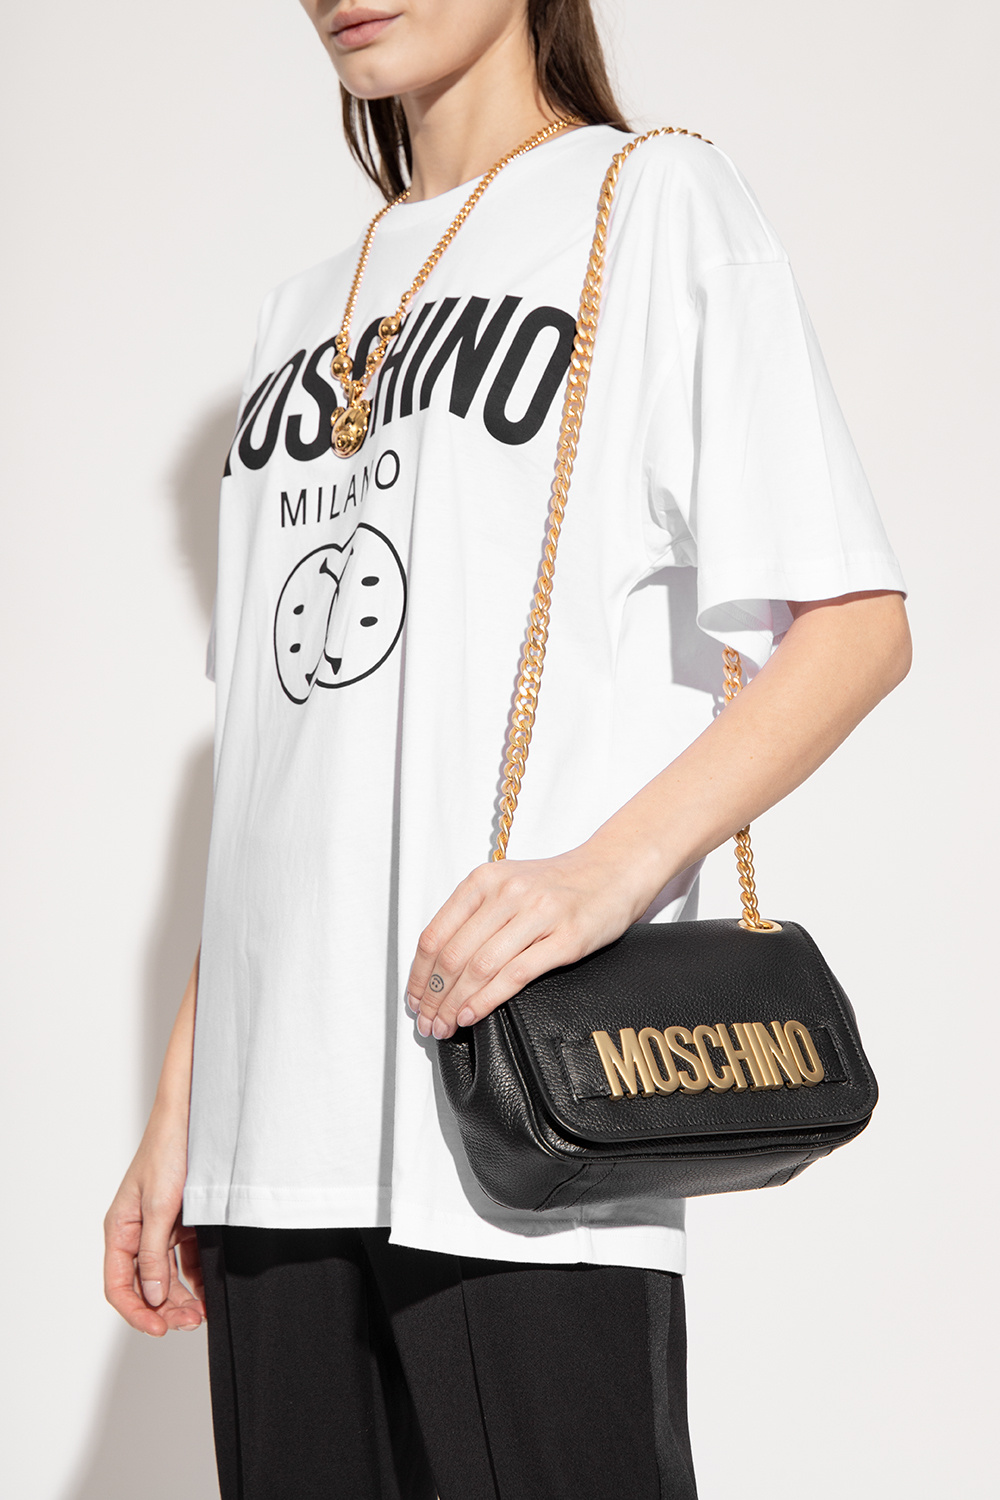 StclaircomoShops | Women's Bags | Moschino Leather shoulder bag 